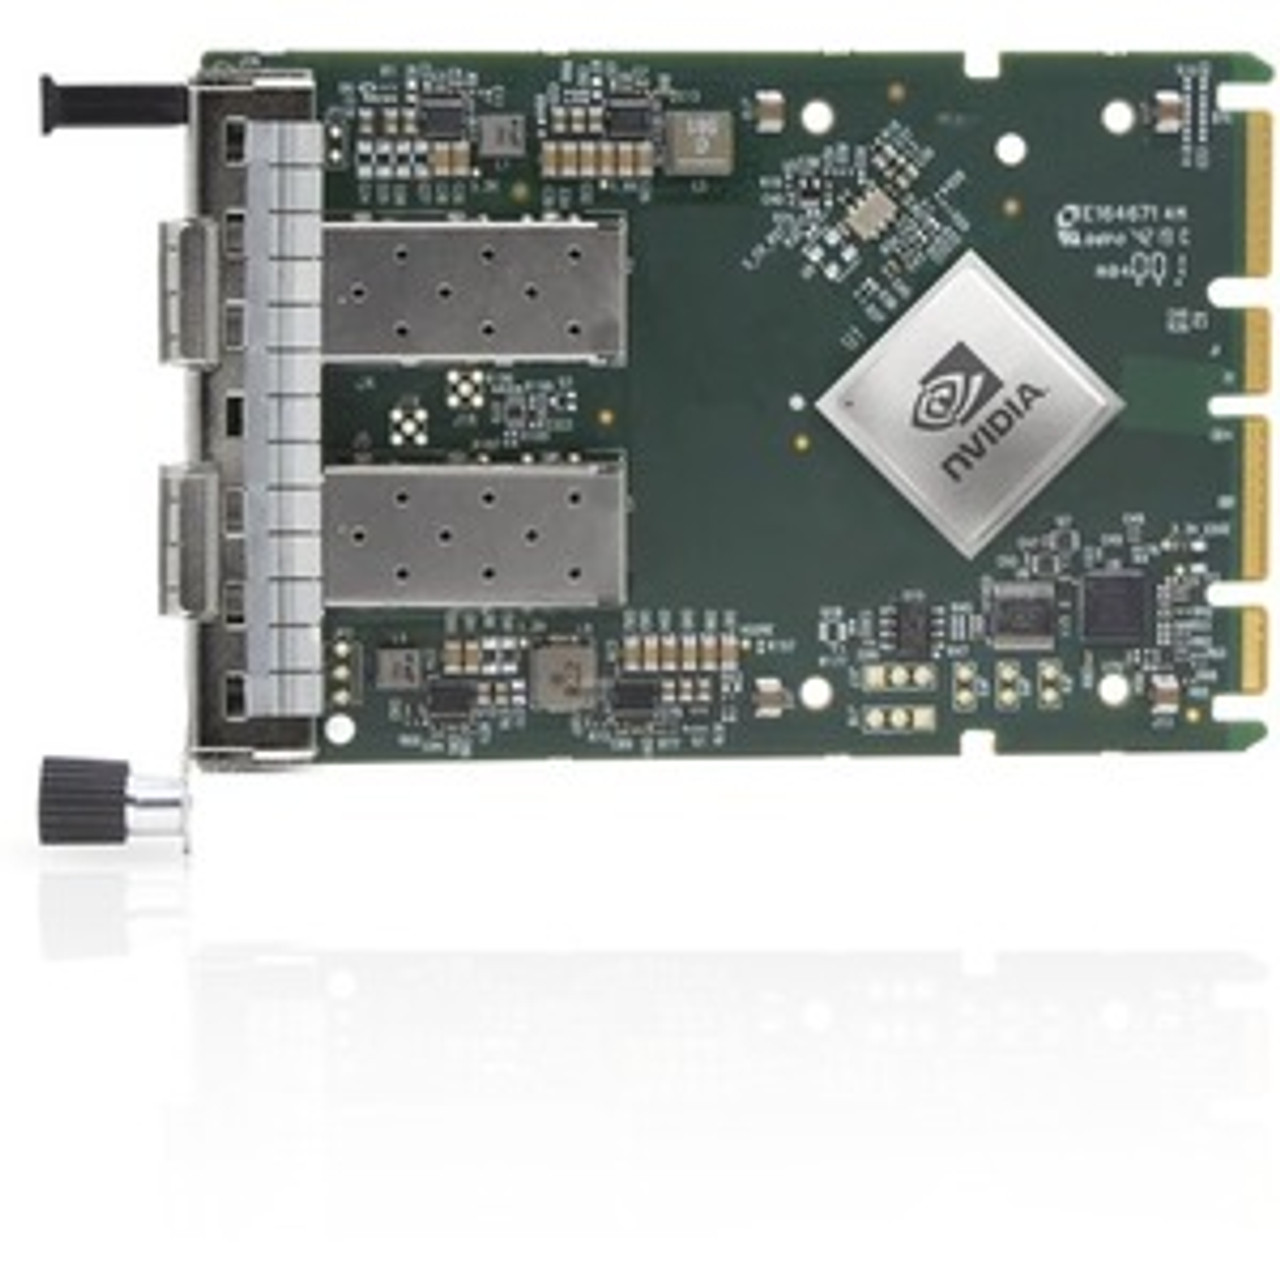 MCX623435AC-VDAB NVIDIA ConnectX-6 Dx EN 200GbE OCP3.0 Single-port QSFP56 PCIe 4.0 x16 Adapter Card